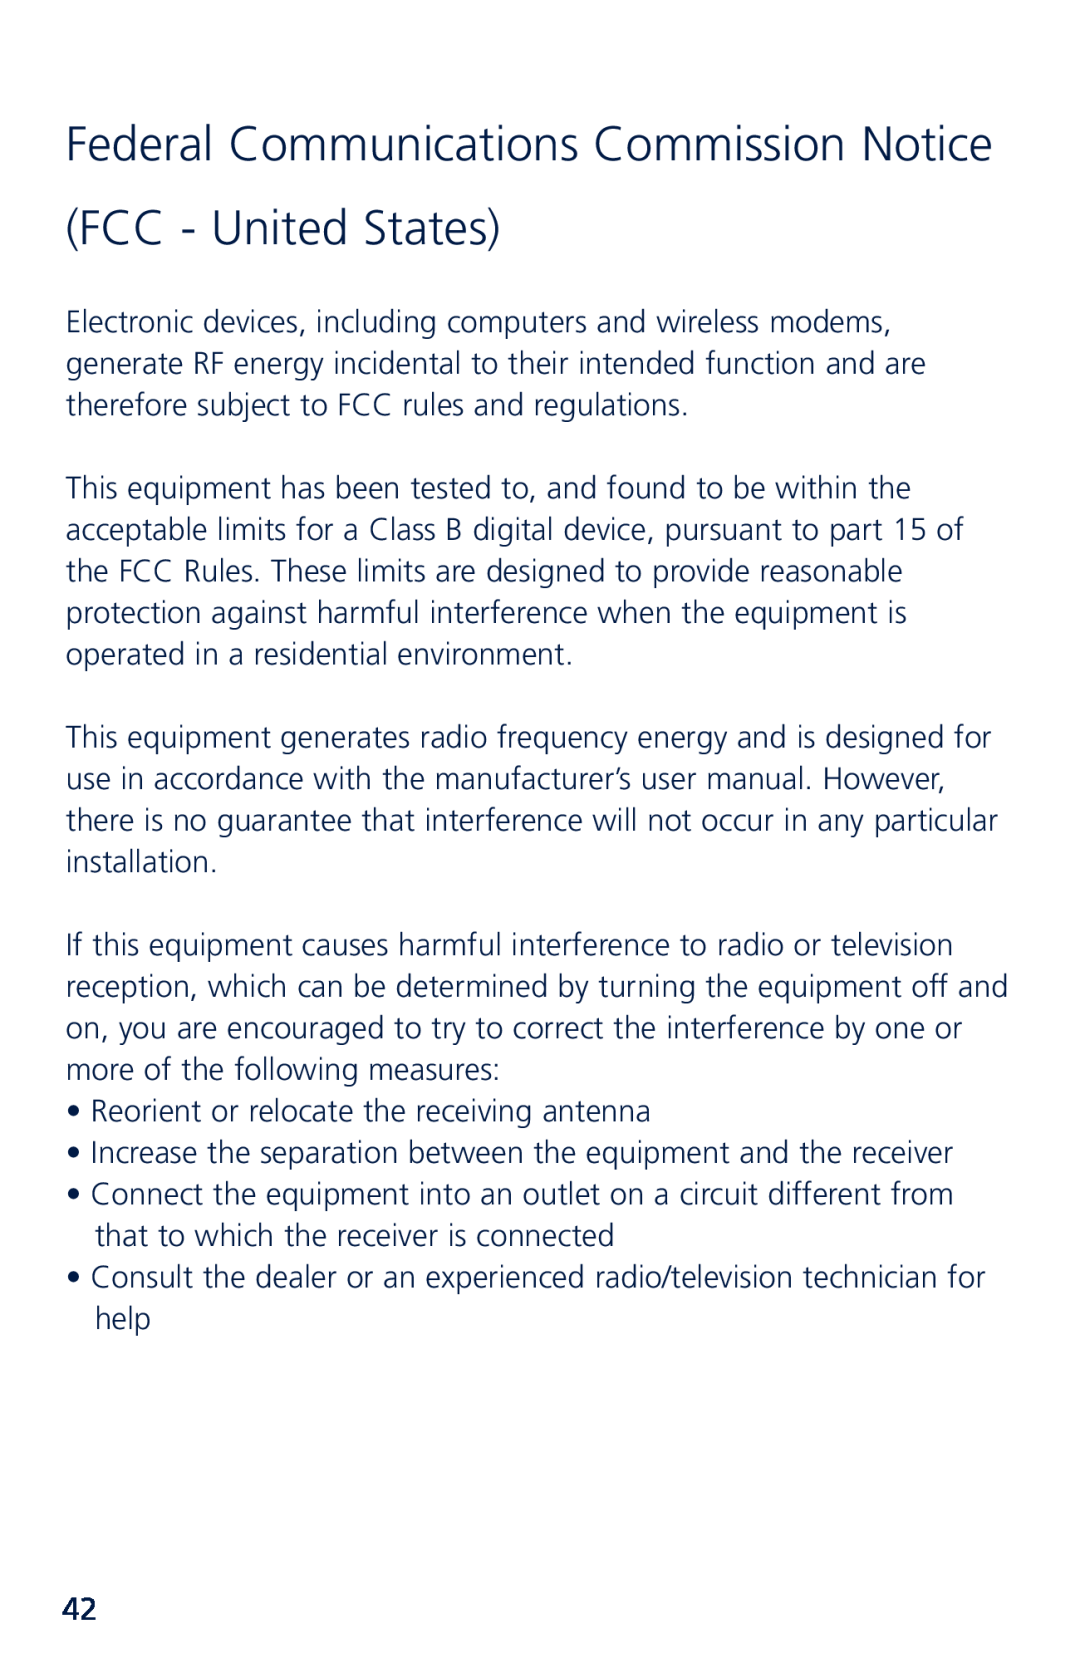 Novatel XU870 manual Federal Communications Commission Notice FCC 